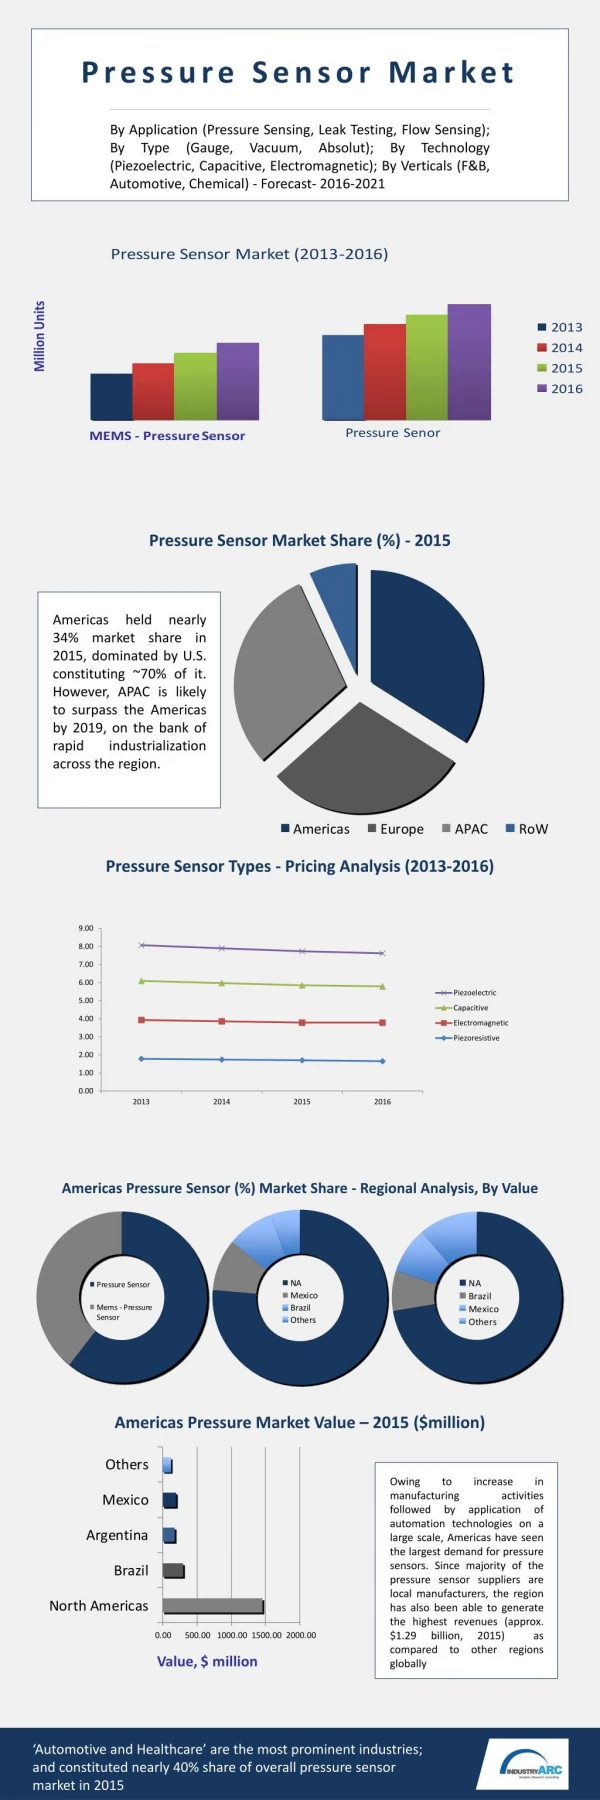 Pressure Sensors Market to Reach 12.23 Billion USD by 2021